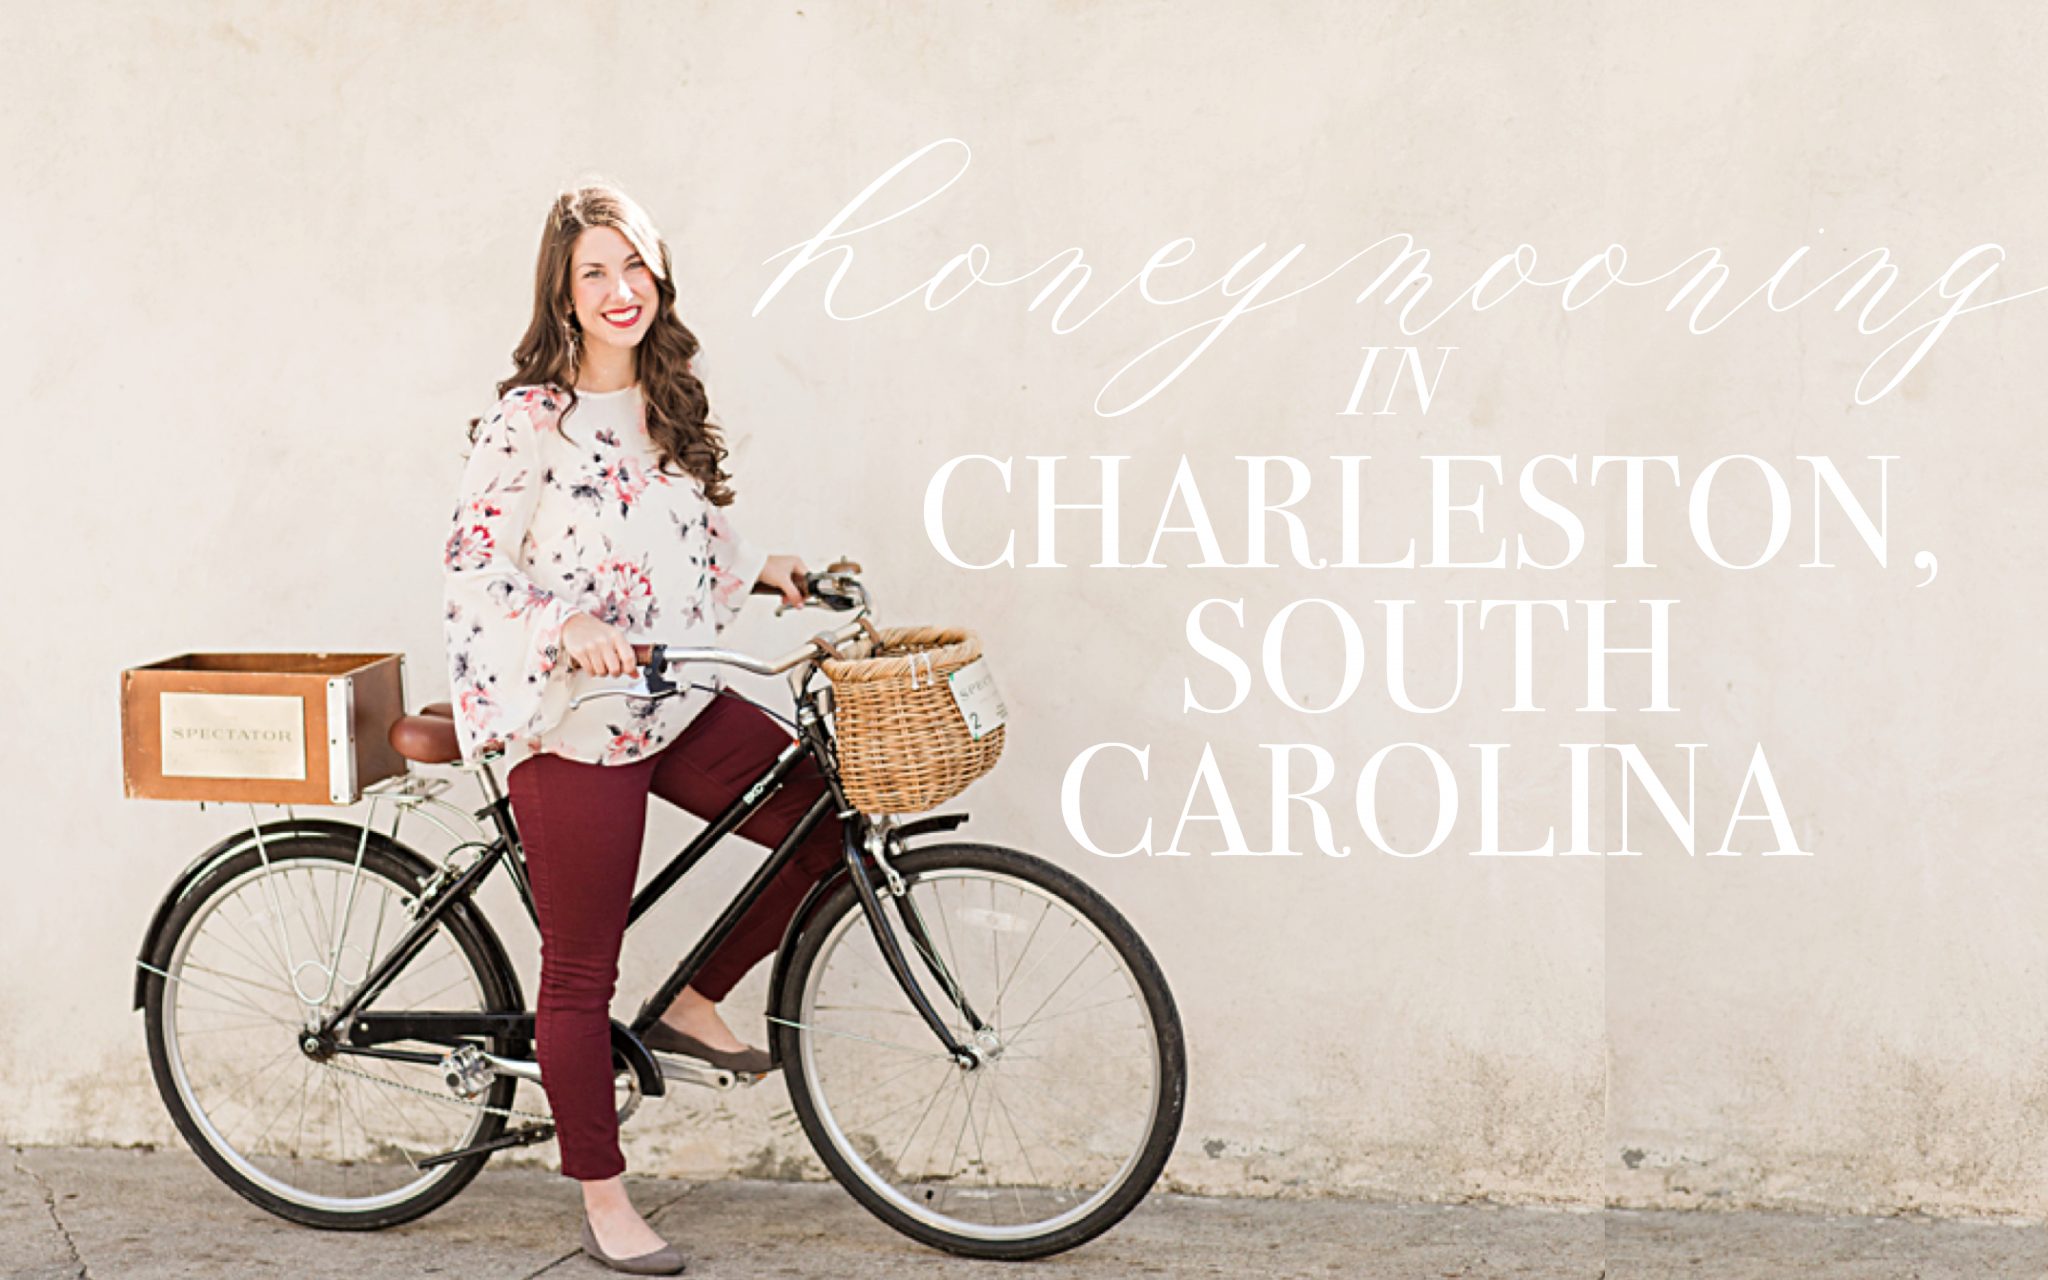 Our Honeymoon destination to Charleston, South Carolina